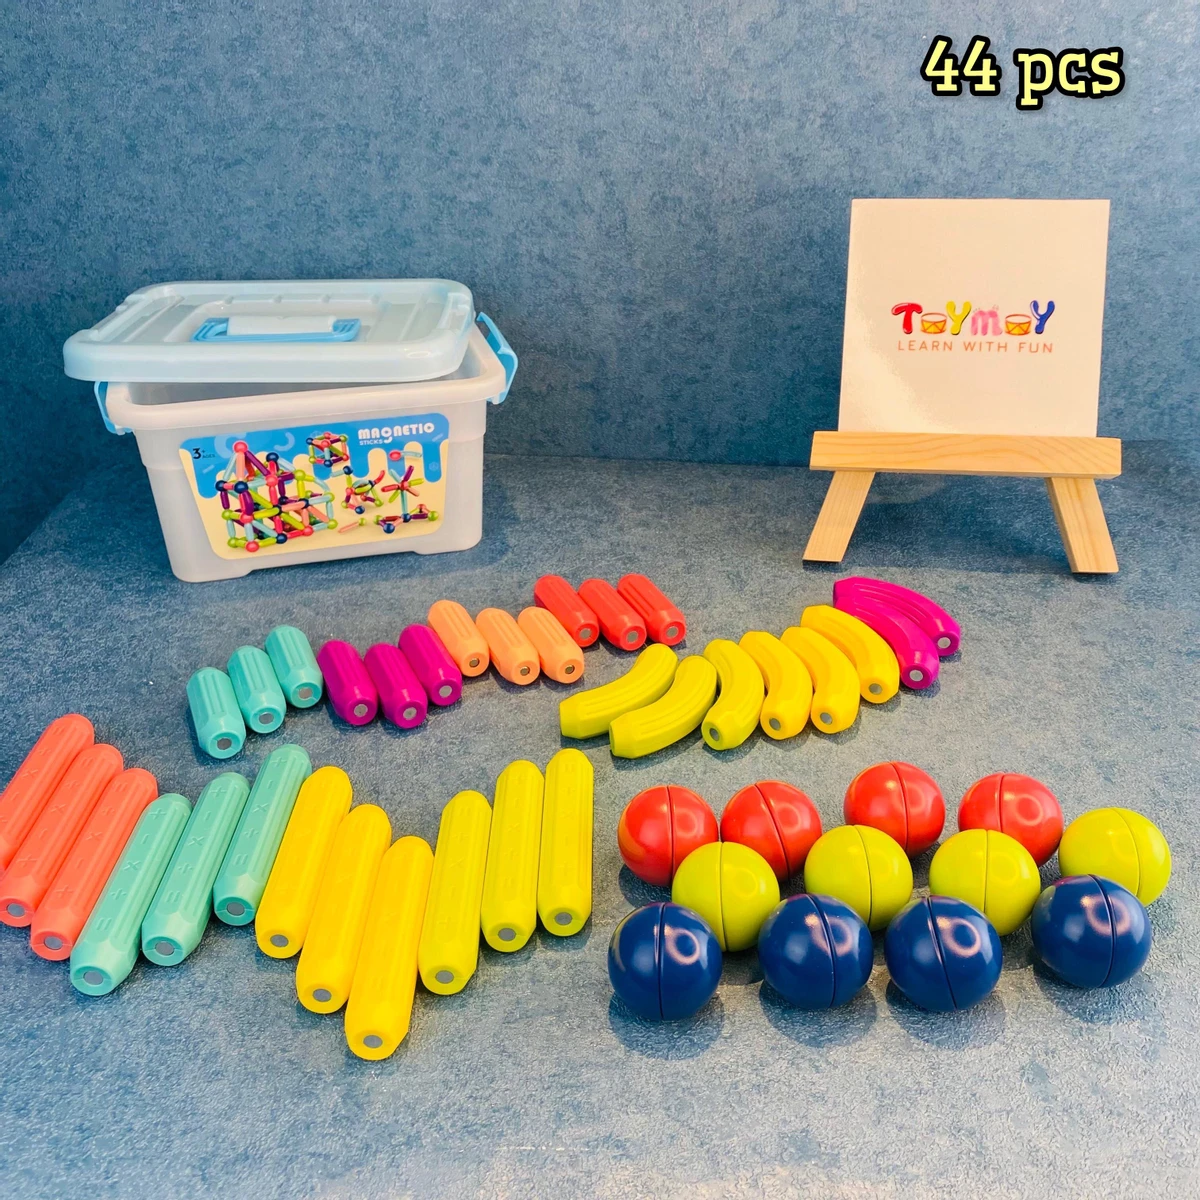 Premium Quality Magnetic Stick STEM educational toys for Kids- 44 pcs